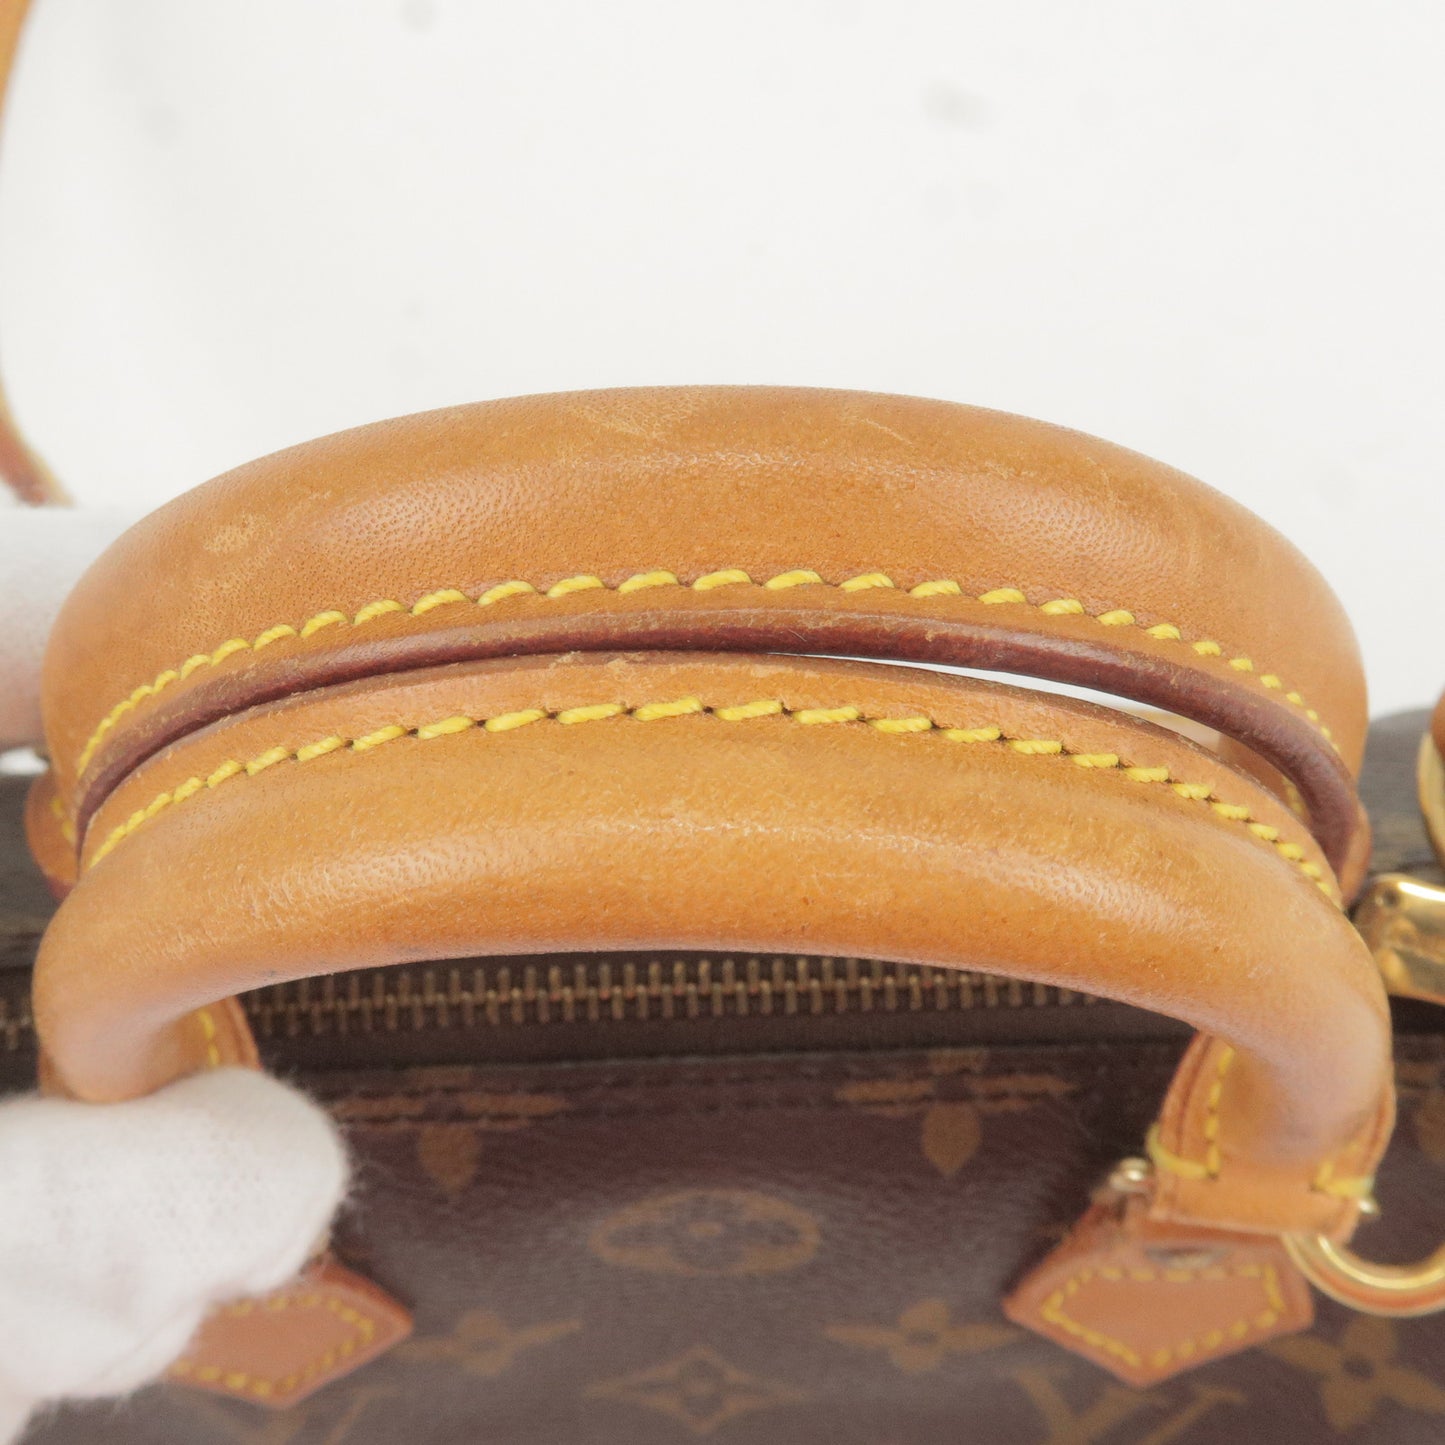 Louis Vuitton Monogram Mini Speedy Shoulder Bag Boston Bag M41534